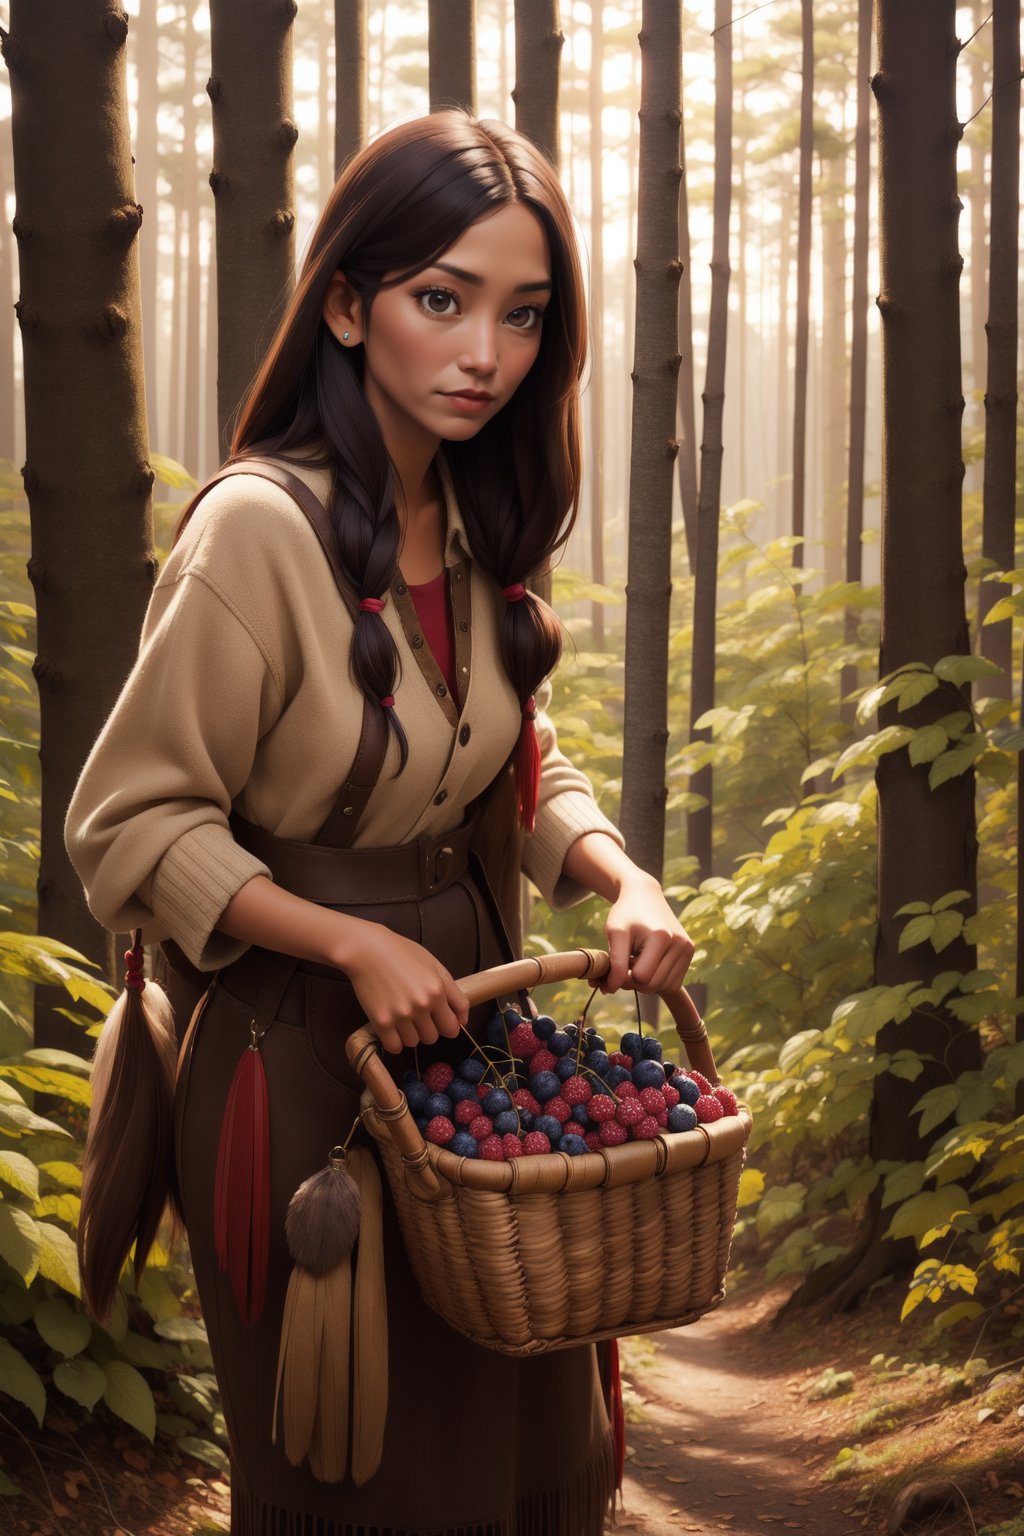 an american indian womandressed in deer skinspicks berries in the forest